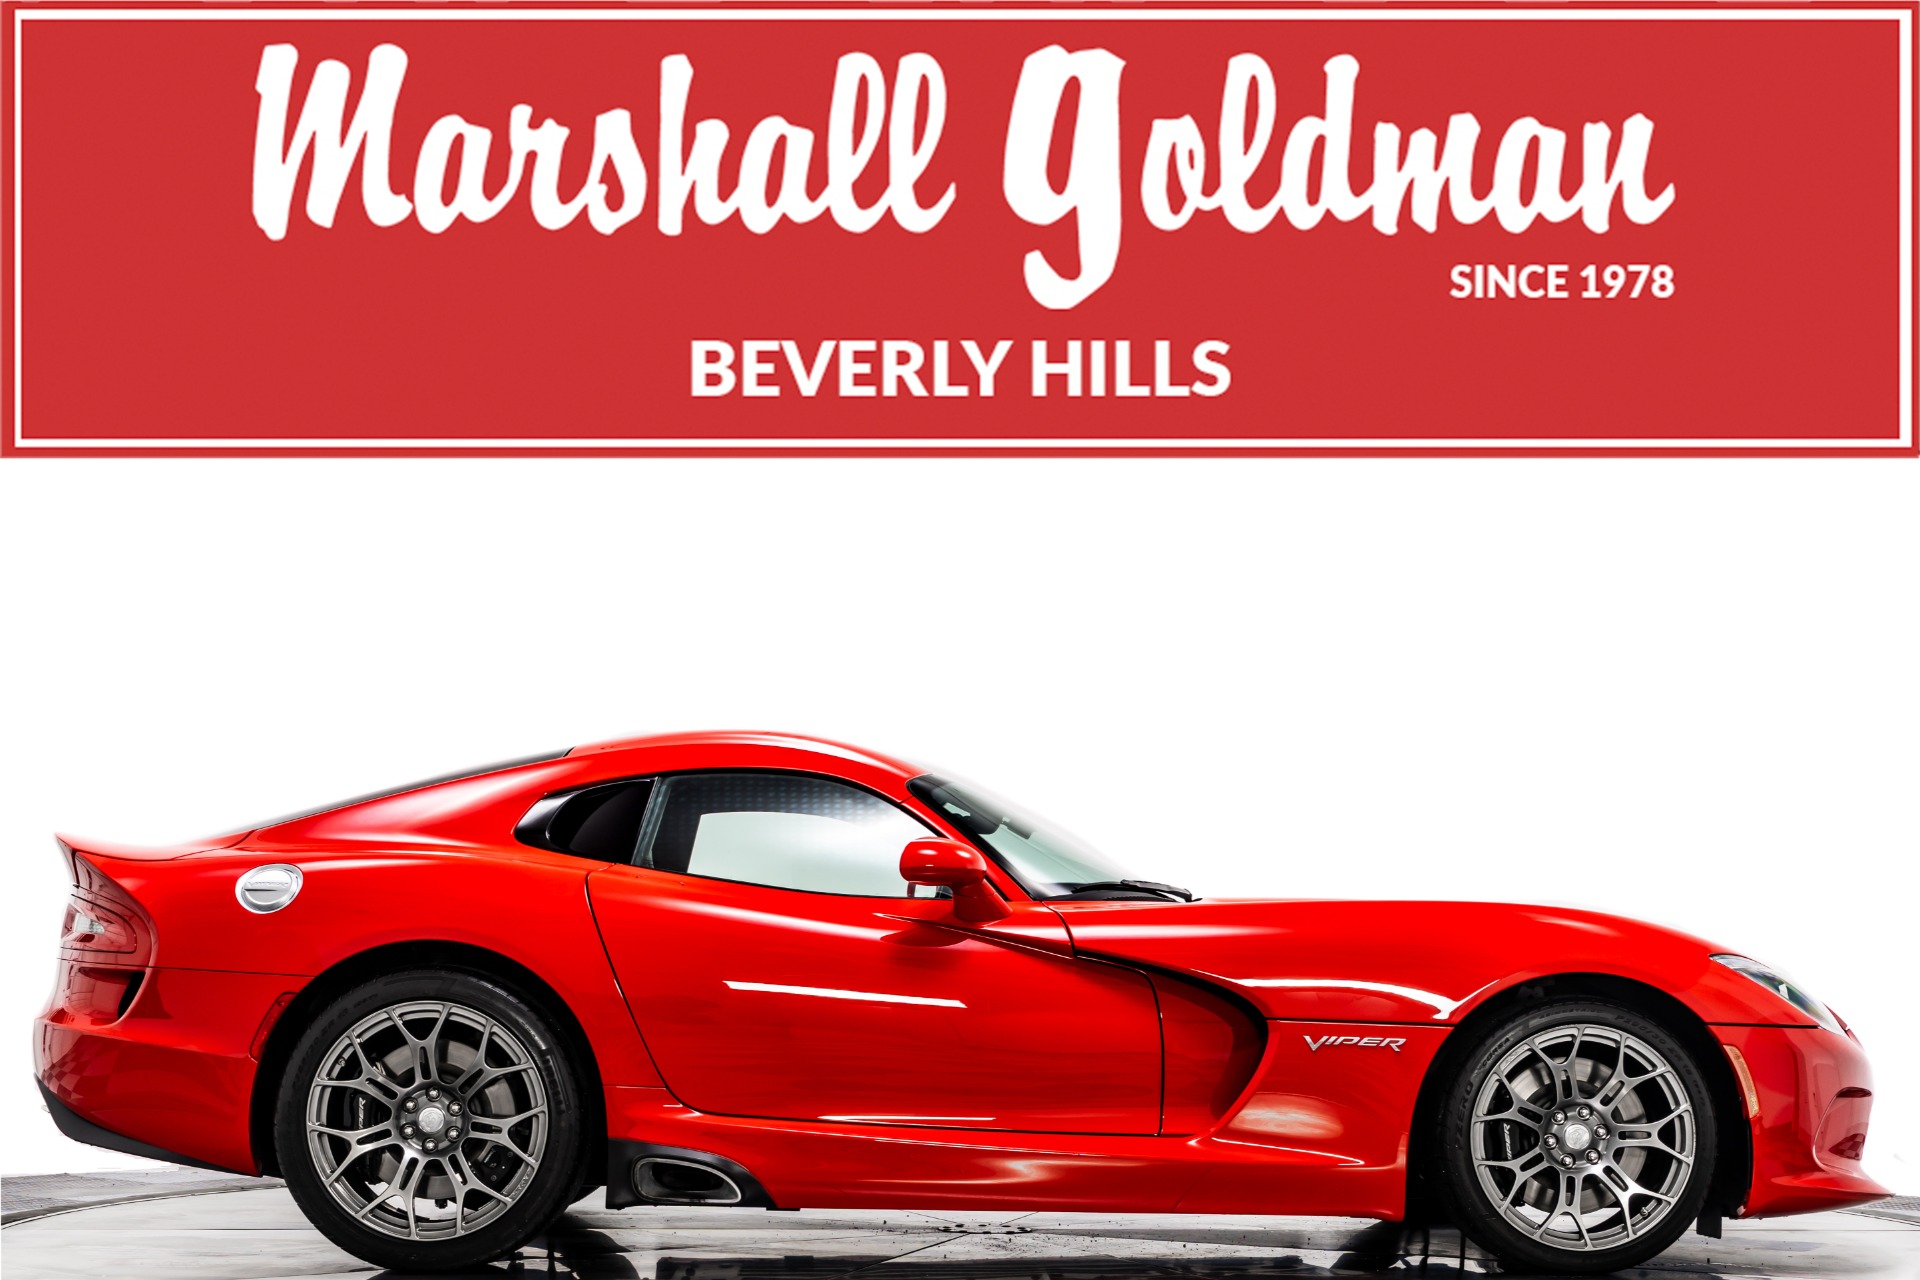 Used 2015 Dodge Viper SRT For Sale (Sold) | Marshall Goldman Beverly Hills  Stock #B22189